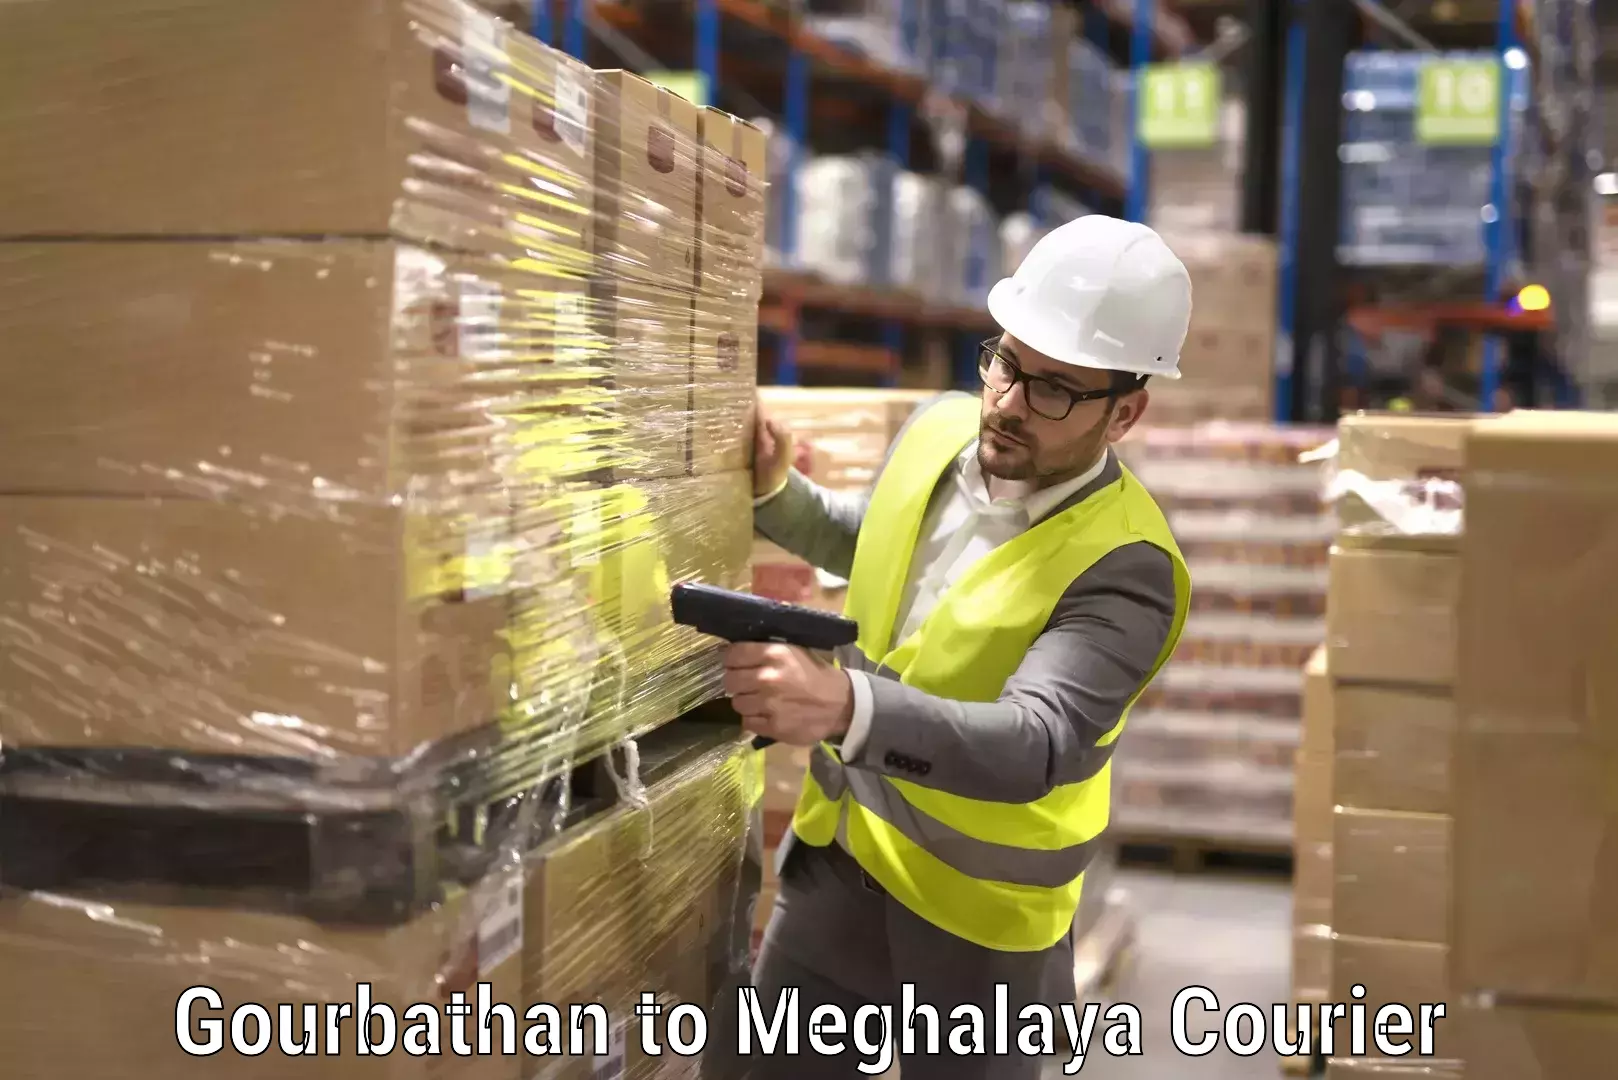 Furniture moving assistance Gourbathan to Meghalaya